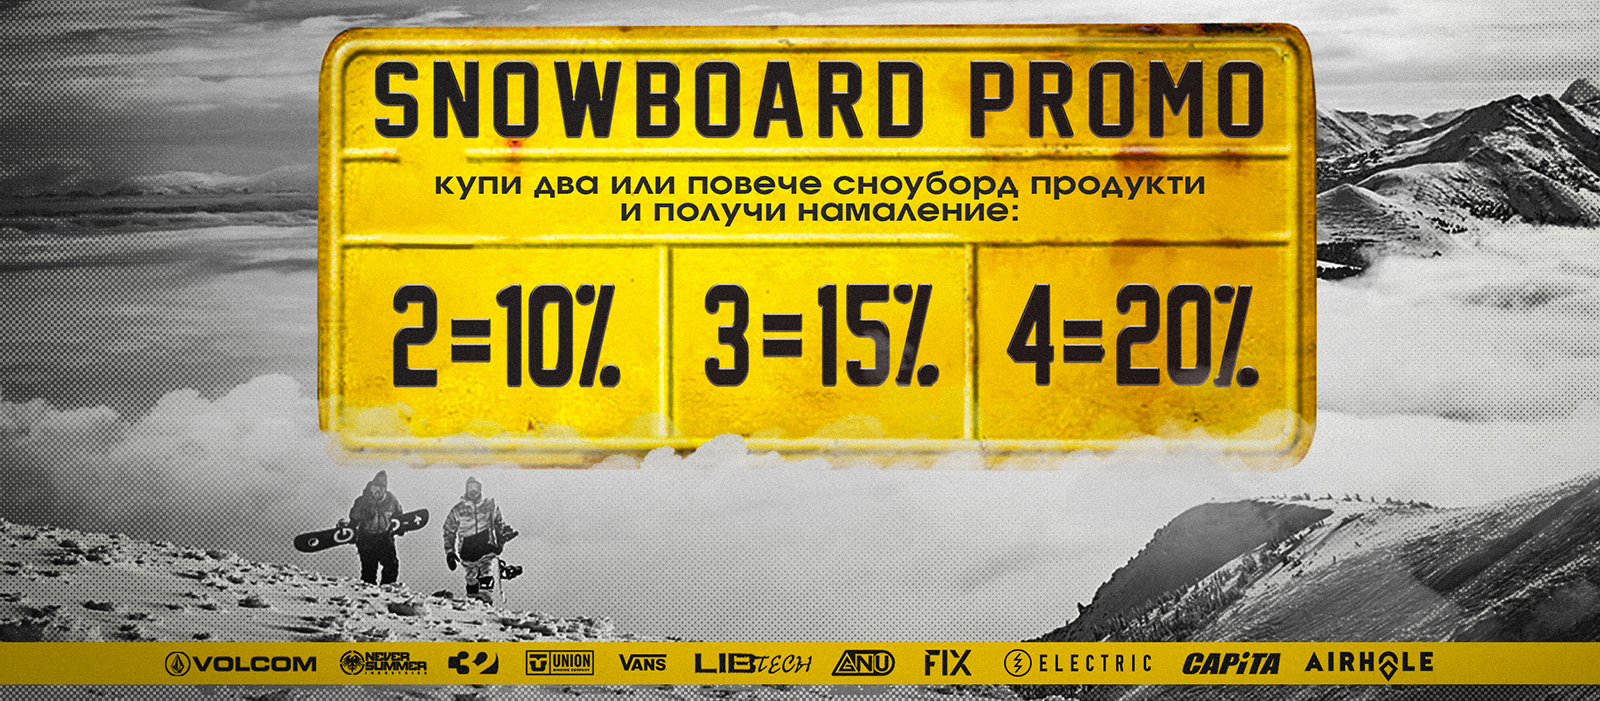 Snowboard Promo